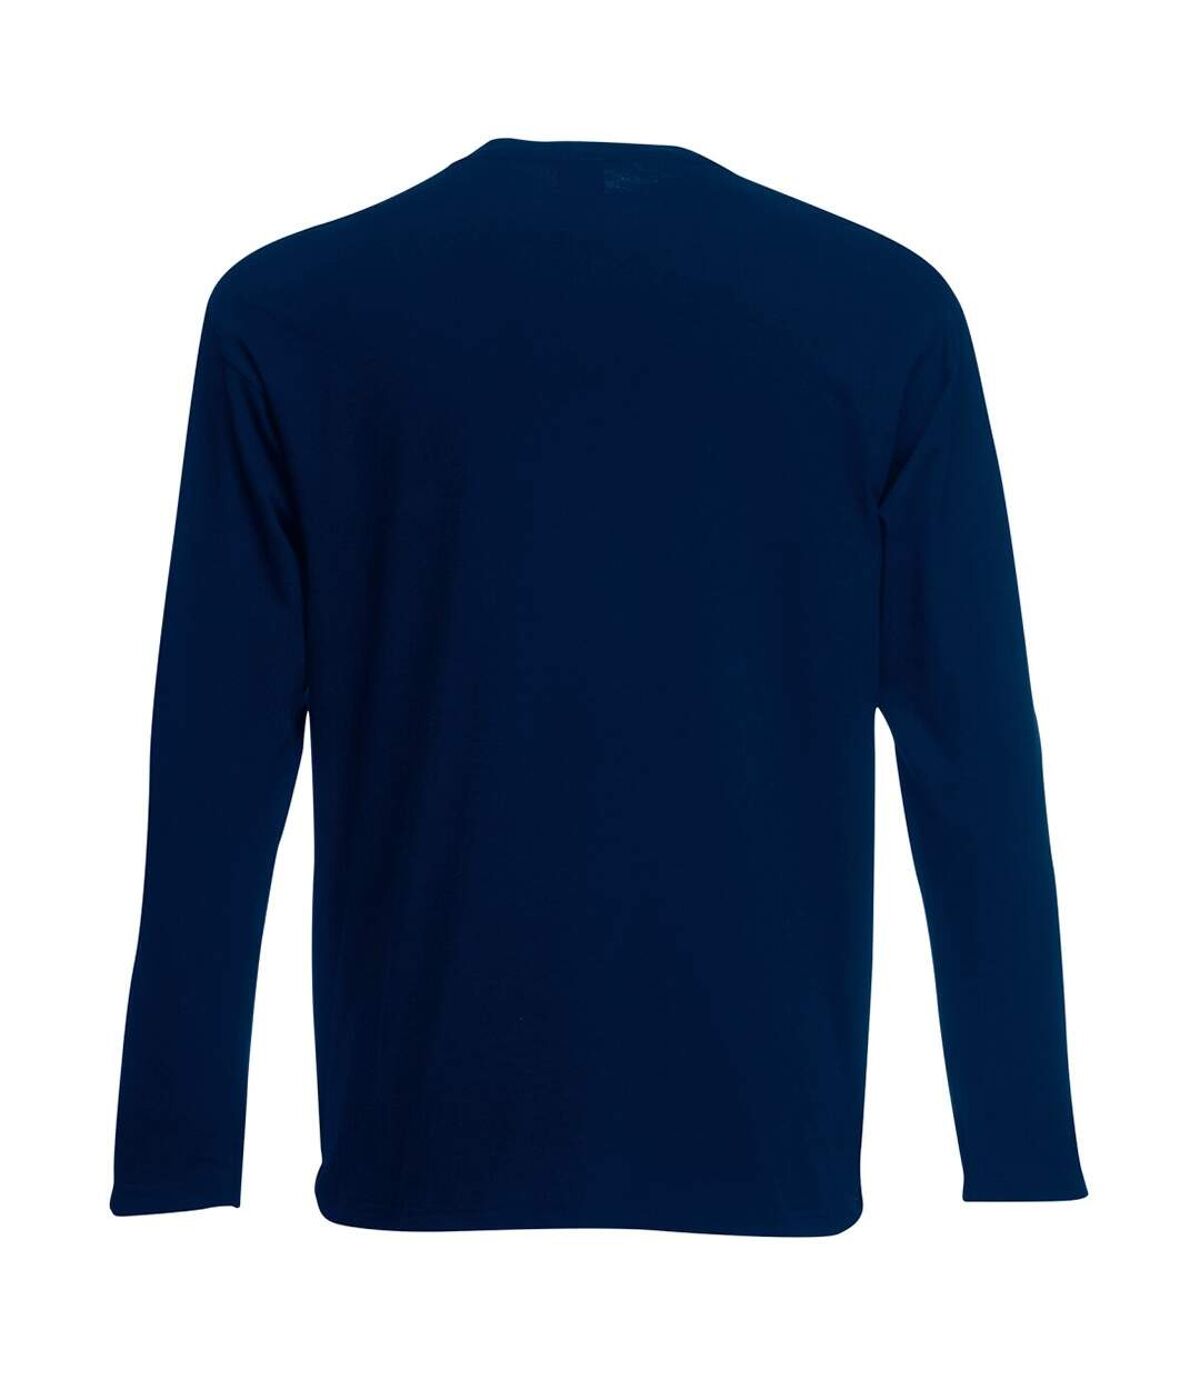 Fruit Of The Loom - T-shirt - Homme (Bleu marine profond) - UTBC331